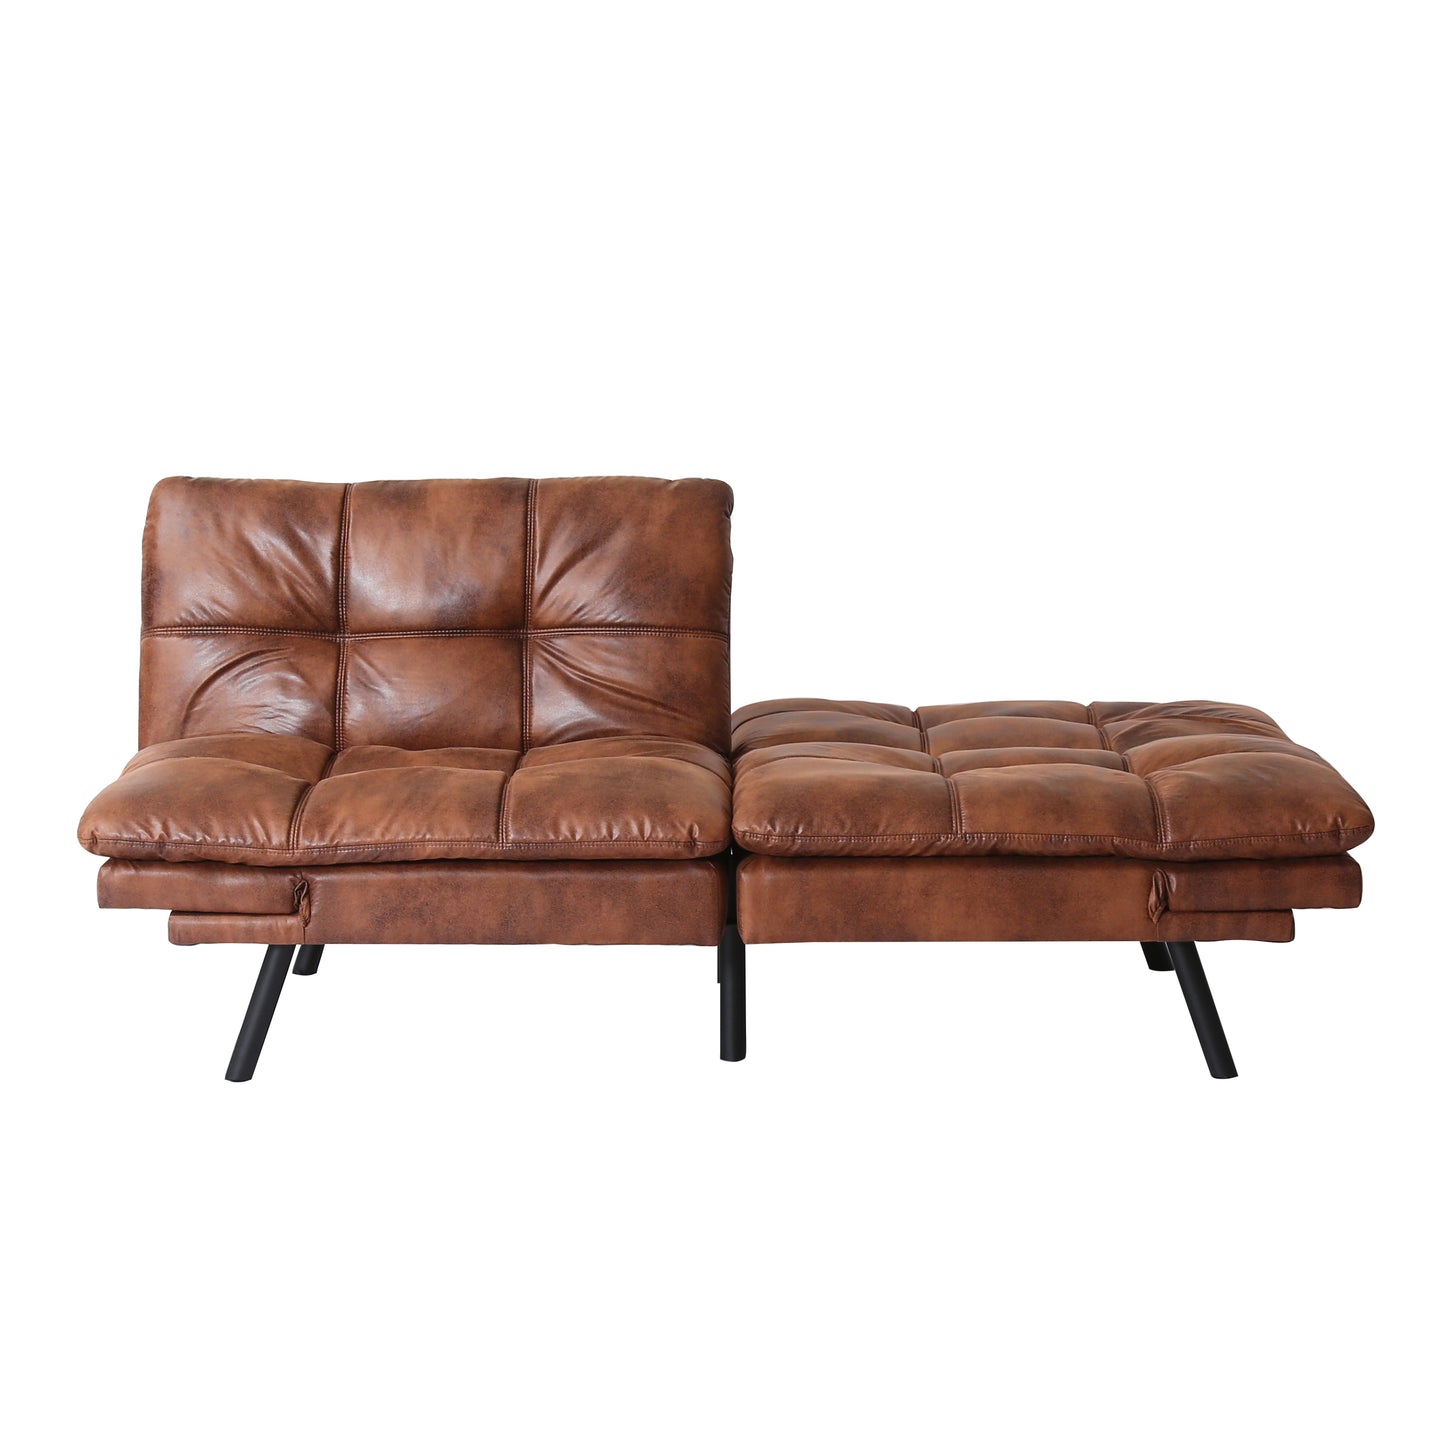 Convertible Futon Couch Bed, Modern Folding Sleeper Sofa